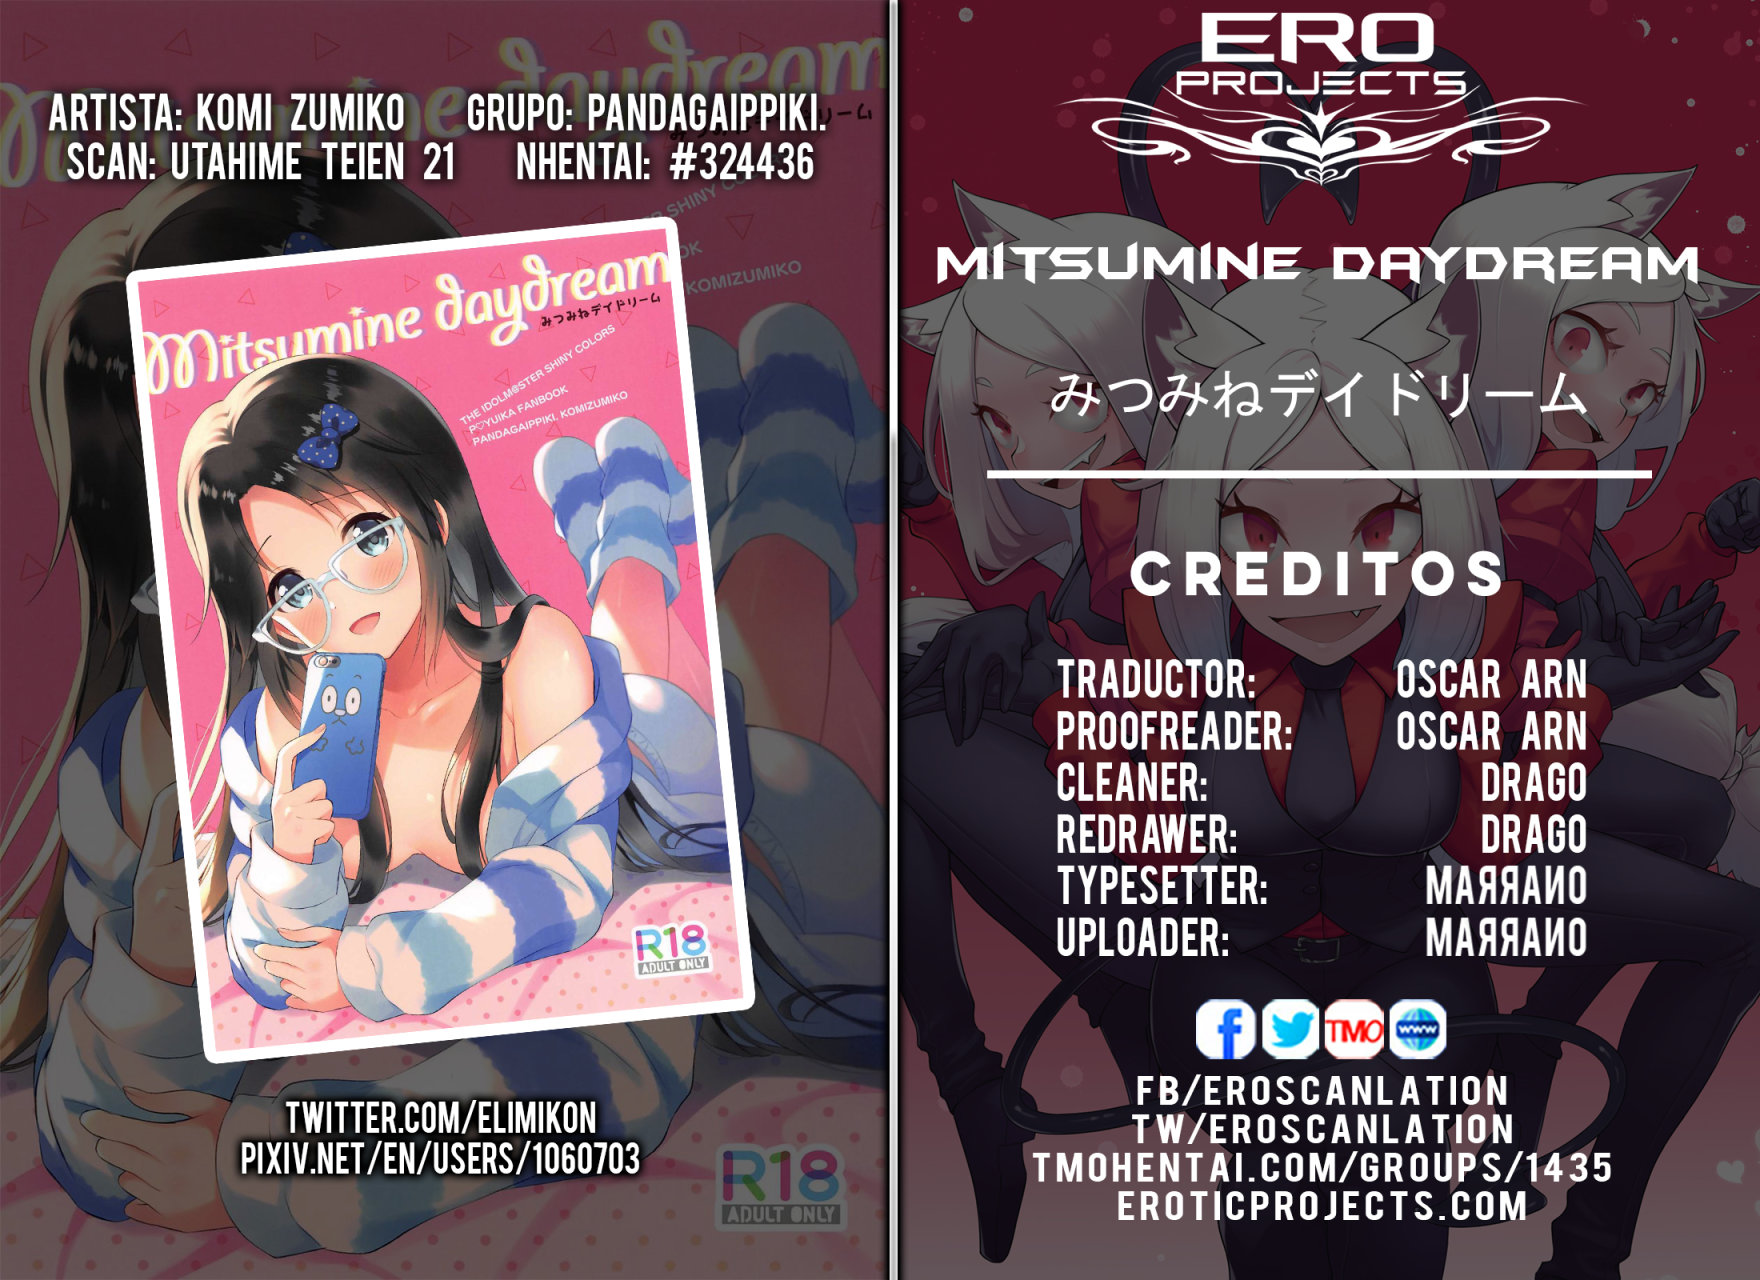 Mitsumine daydream (Ero Projects) - 1